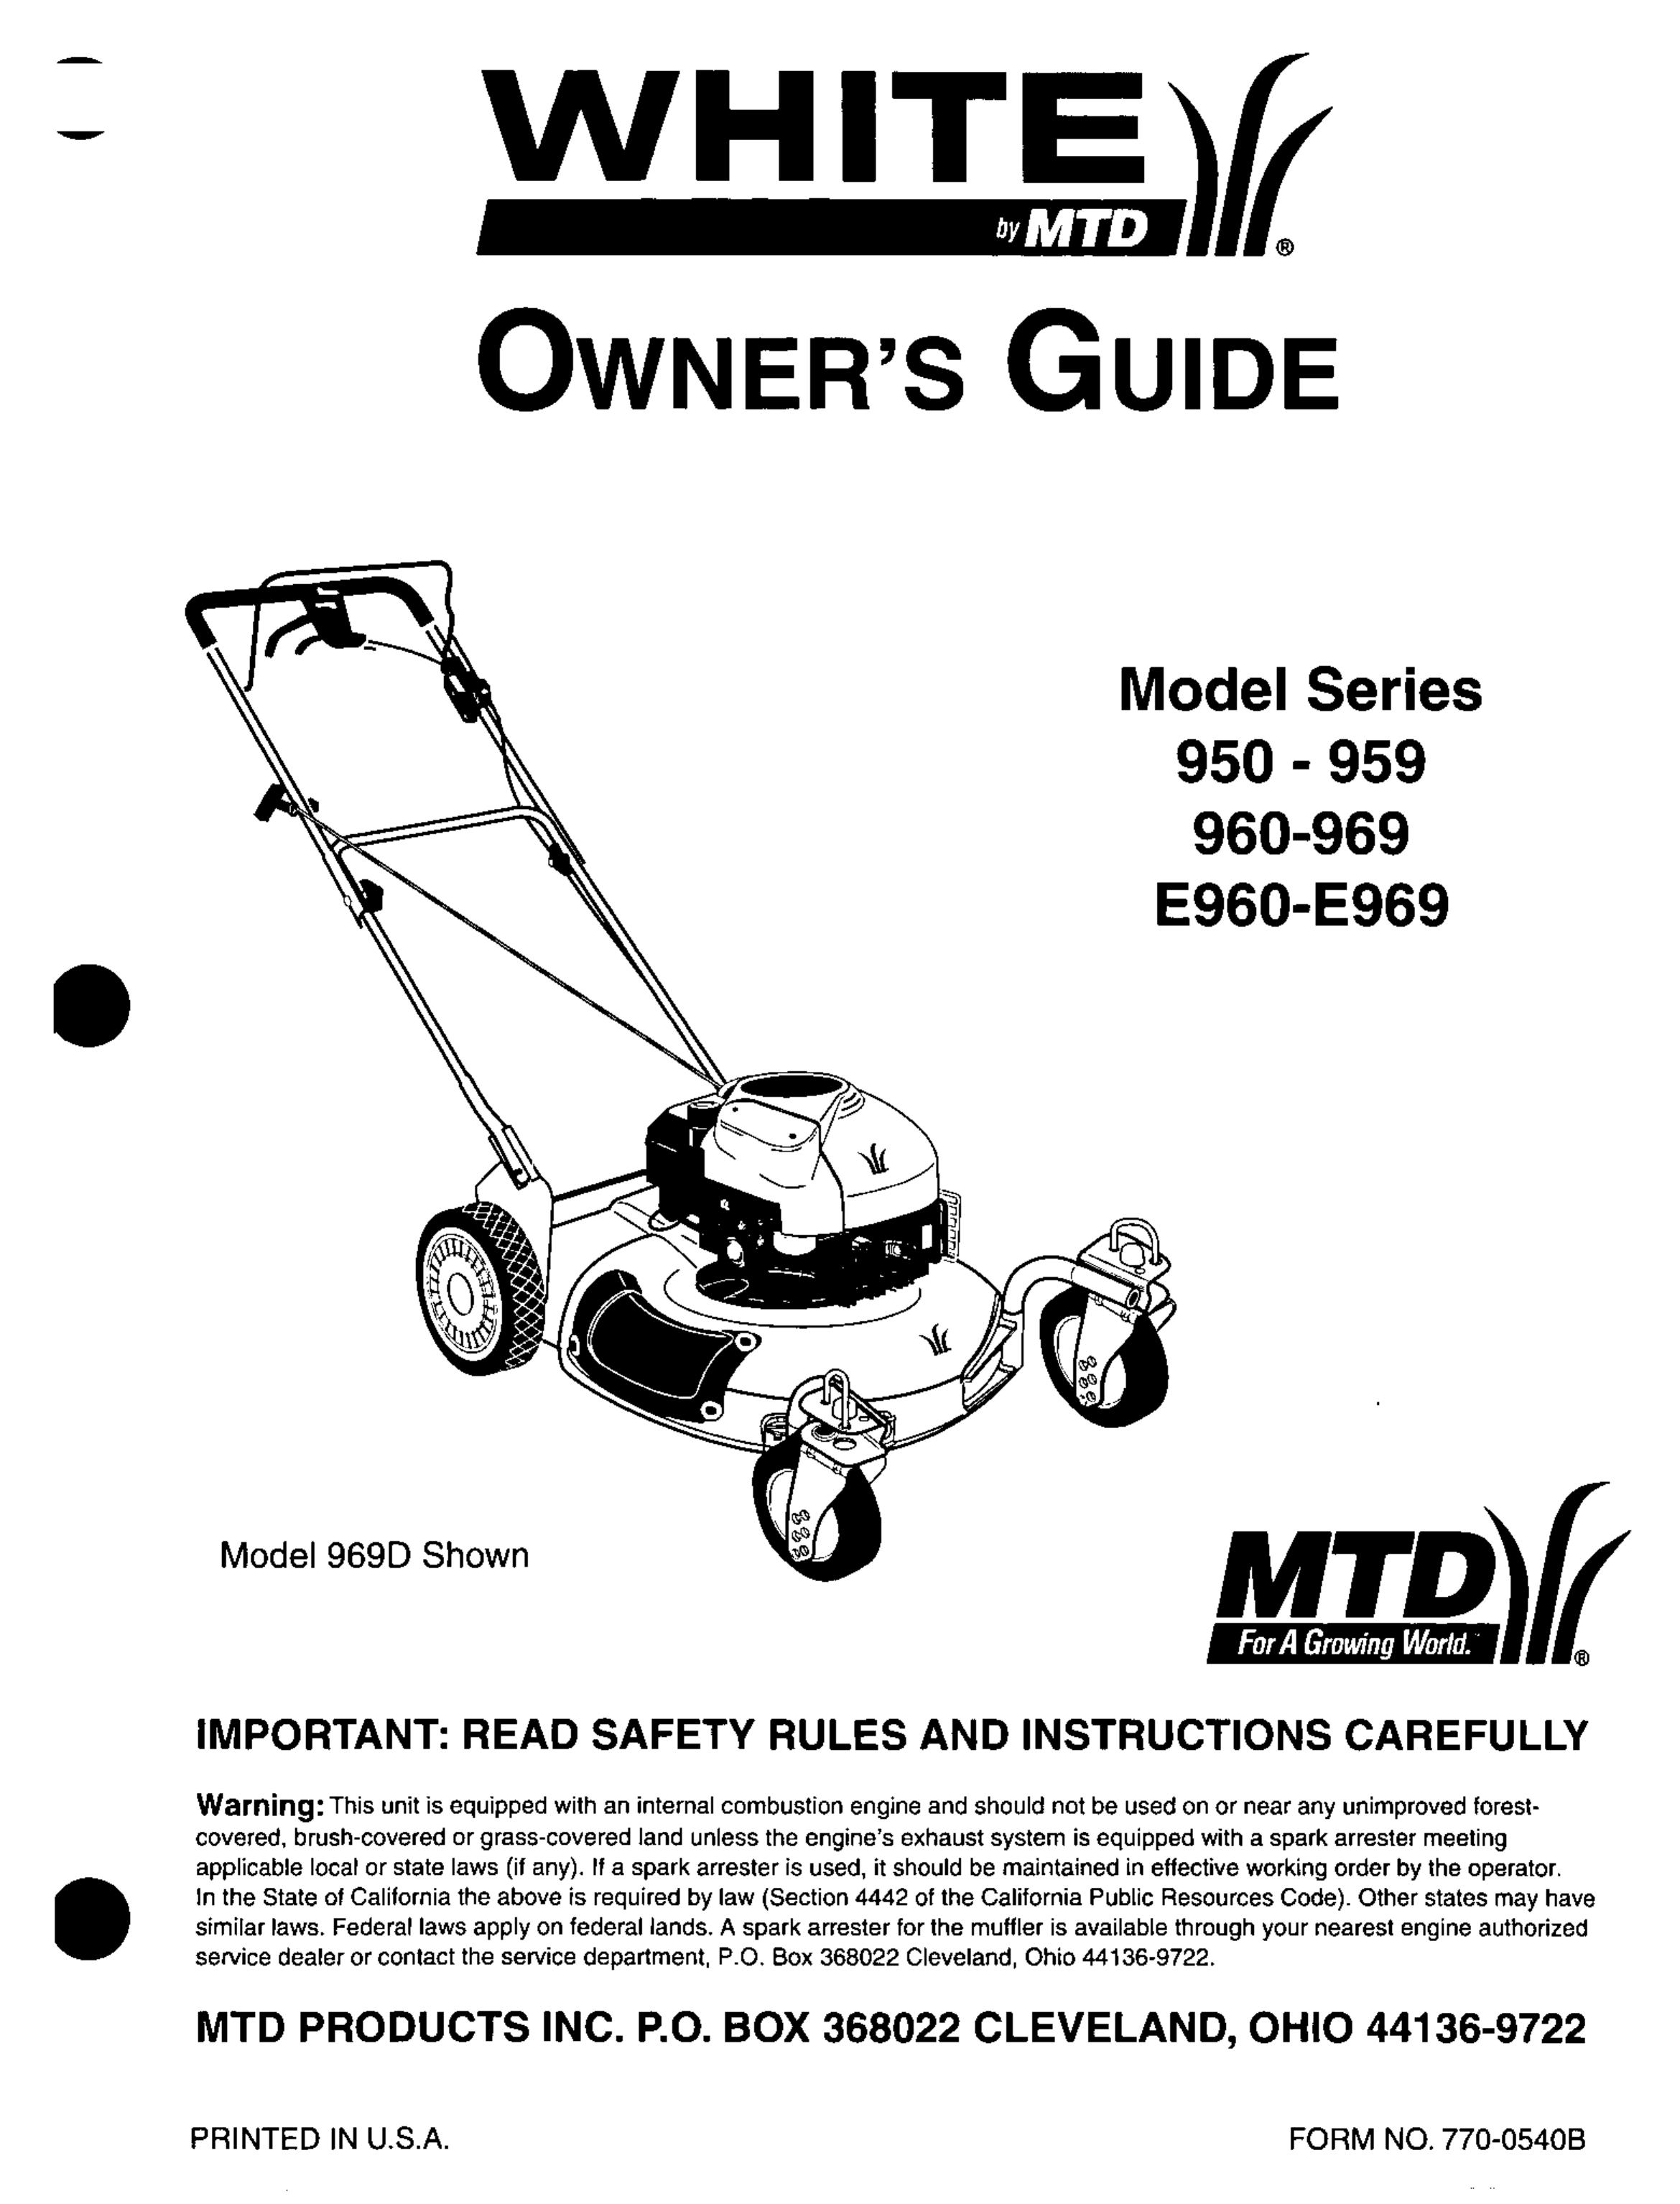 White 960-969 Lawn Mower User Manual